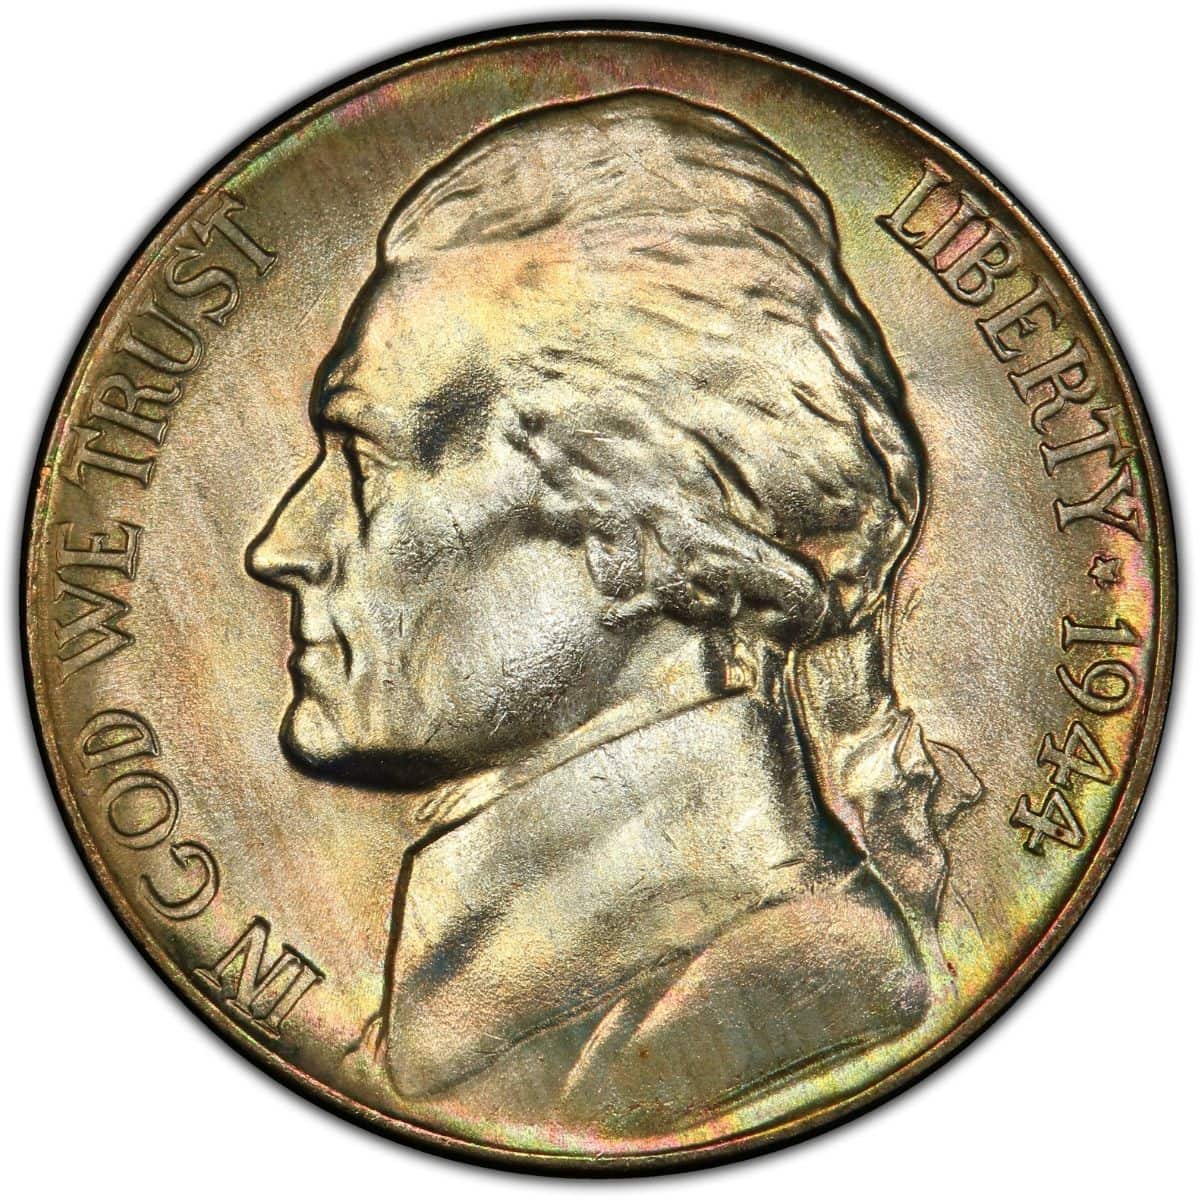 1944 Nickel values